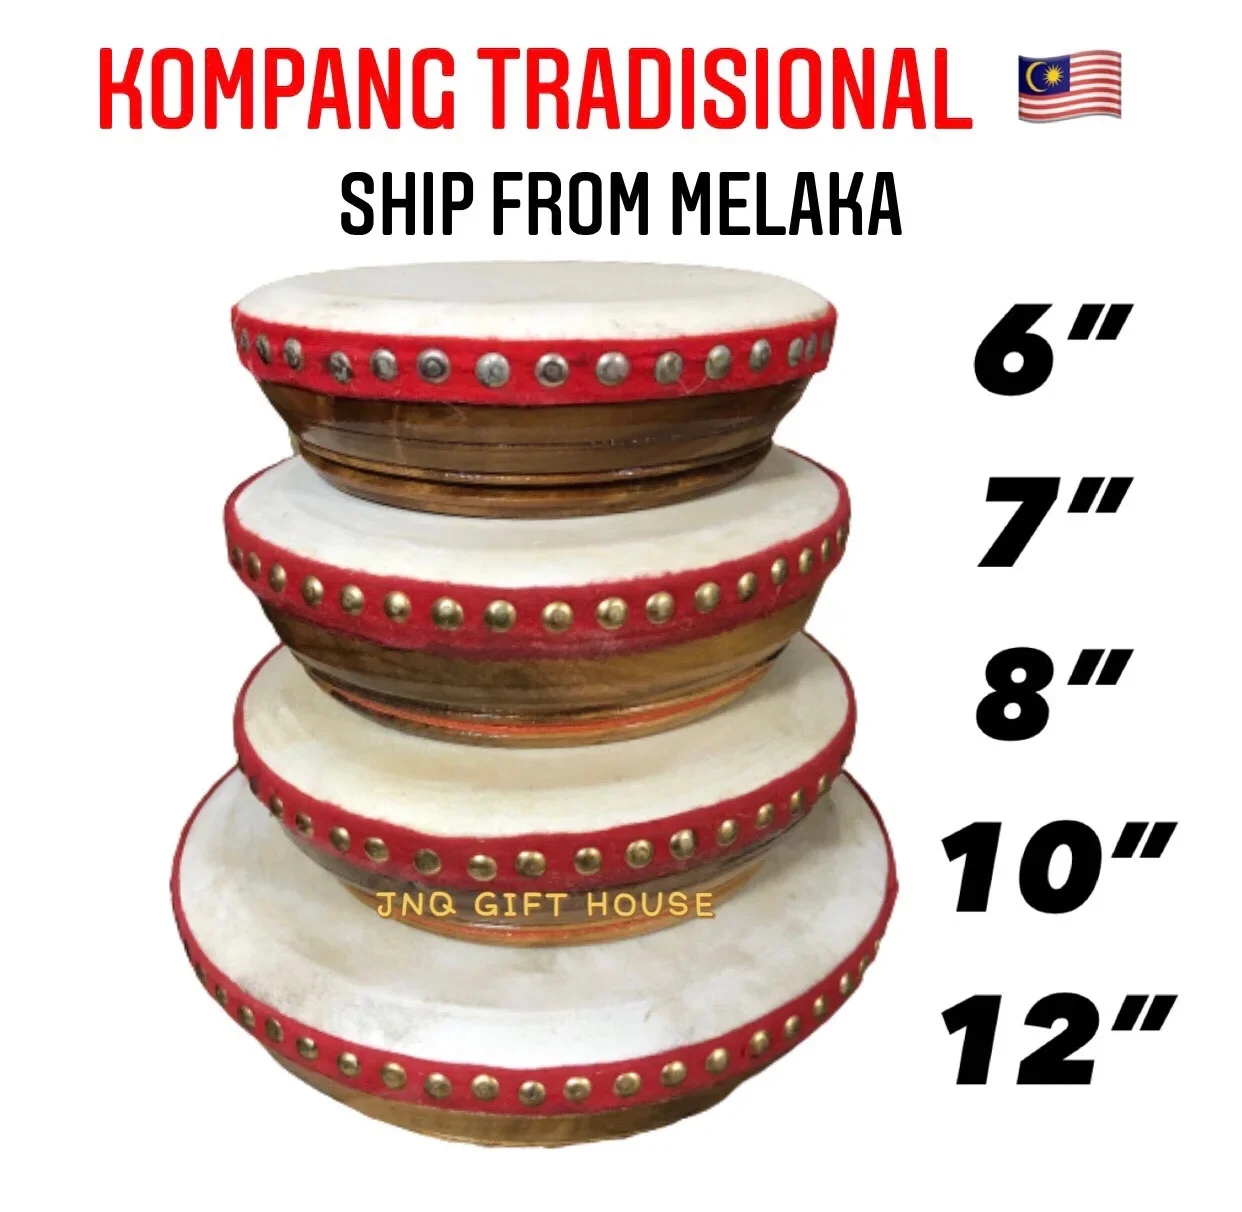 [READY STOCK🇲🇾] Kompang Tradisional Asli Melayu Kompang Kulit Kambing Alat Muzik Persembahan Buatan Kampung Traditional Malay Drum Musical Instrument